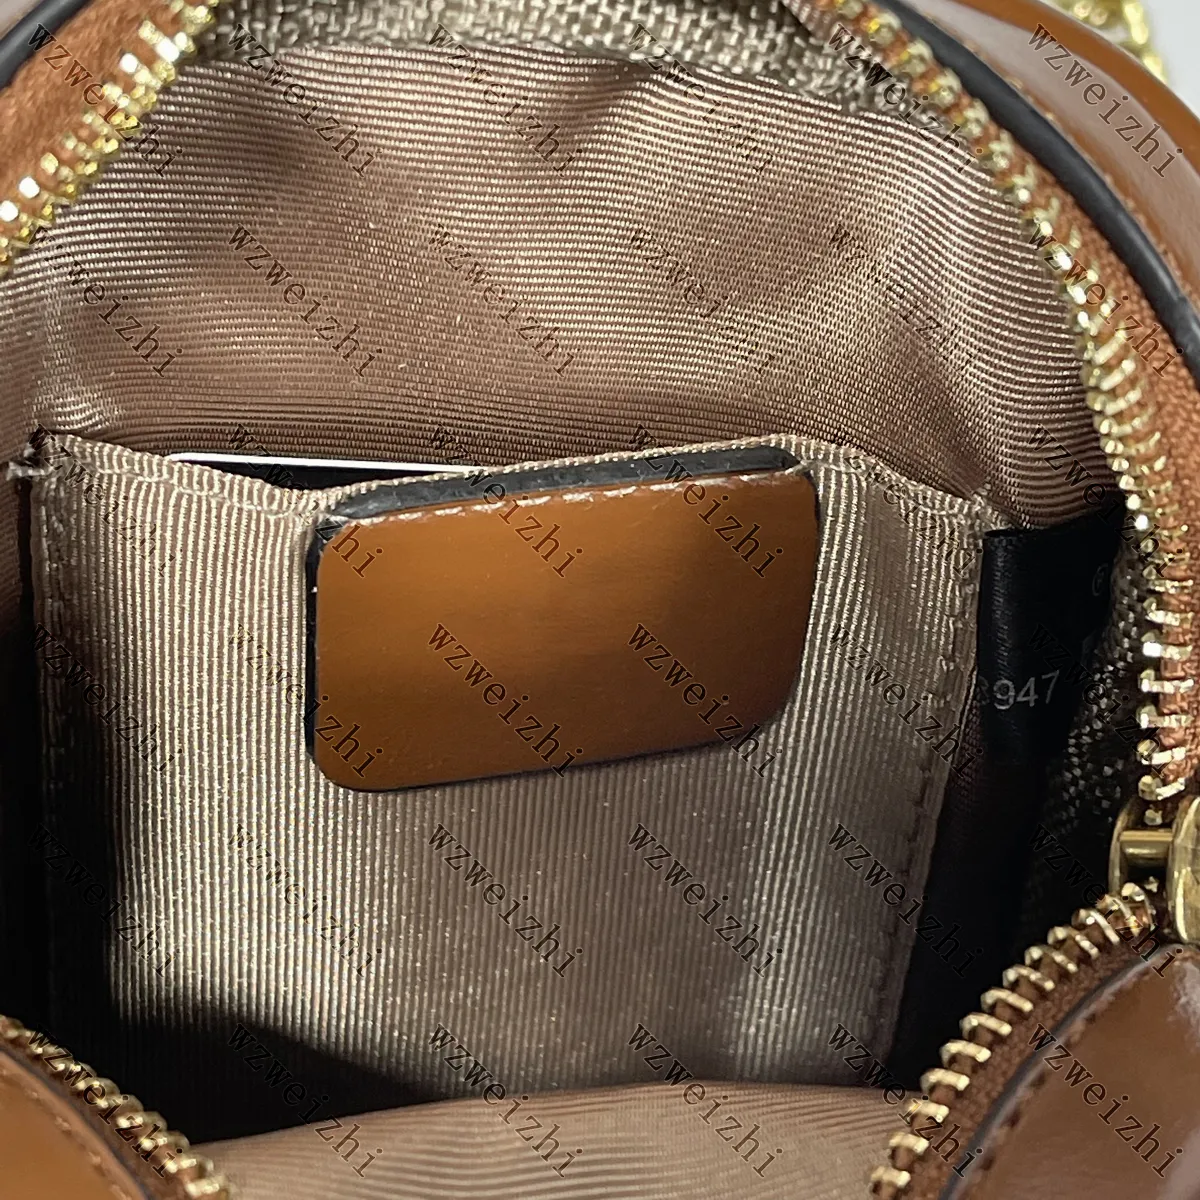 Latest Style Marmont Mini Handbag Wallets Coin Purses Gold Chain Shoulder Bag Crossbody Bags Mobile Phone Package 10 5x17x5CM277U